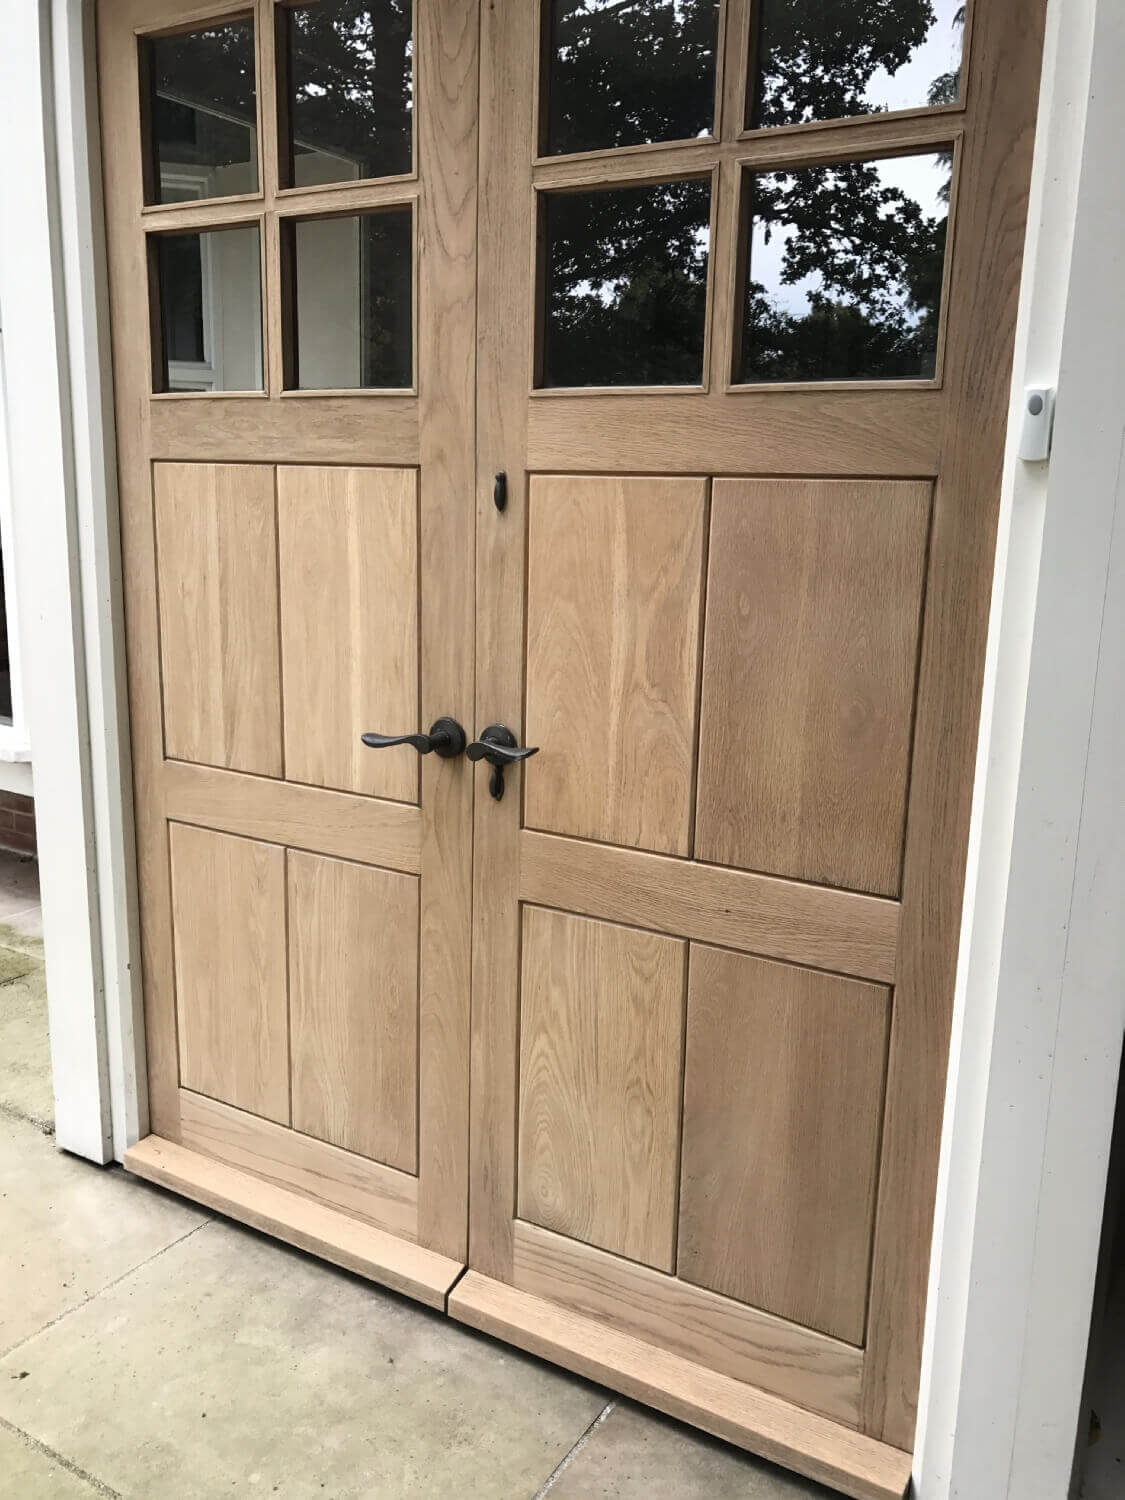 Oak door renovation Brundall Norfolk